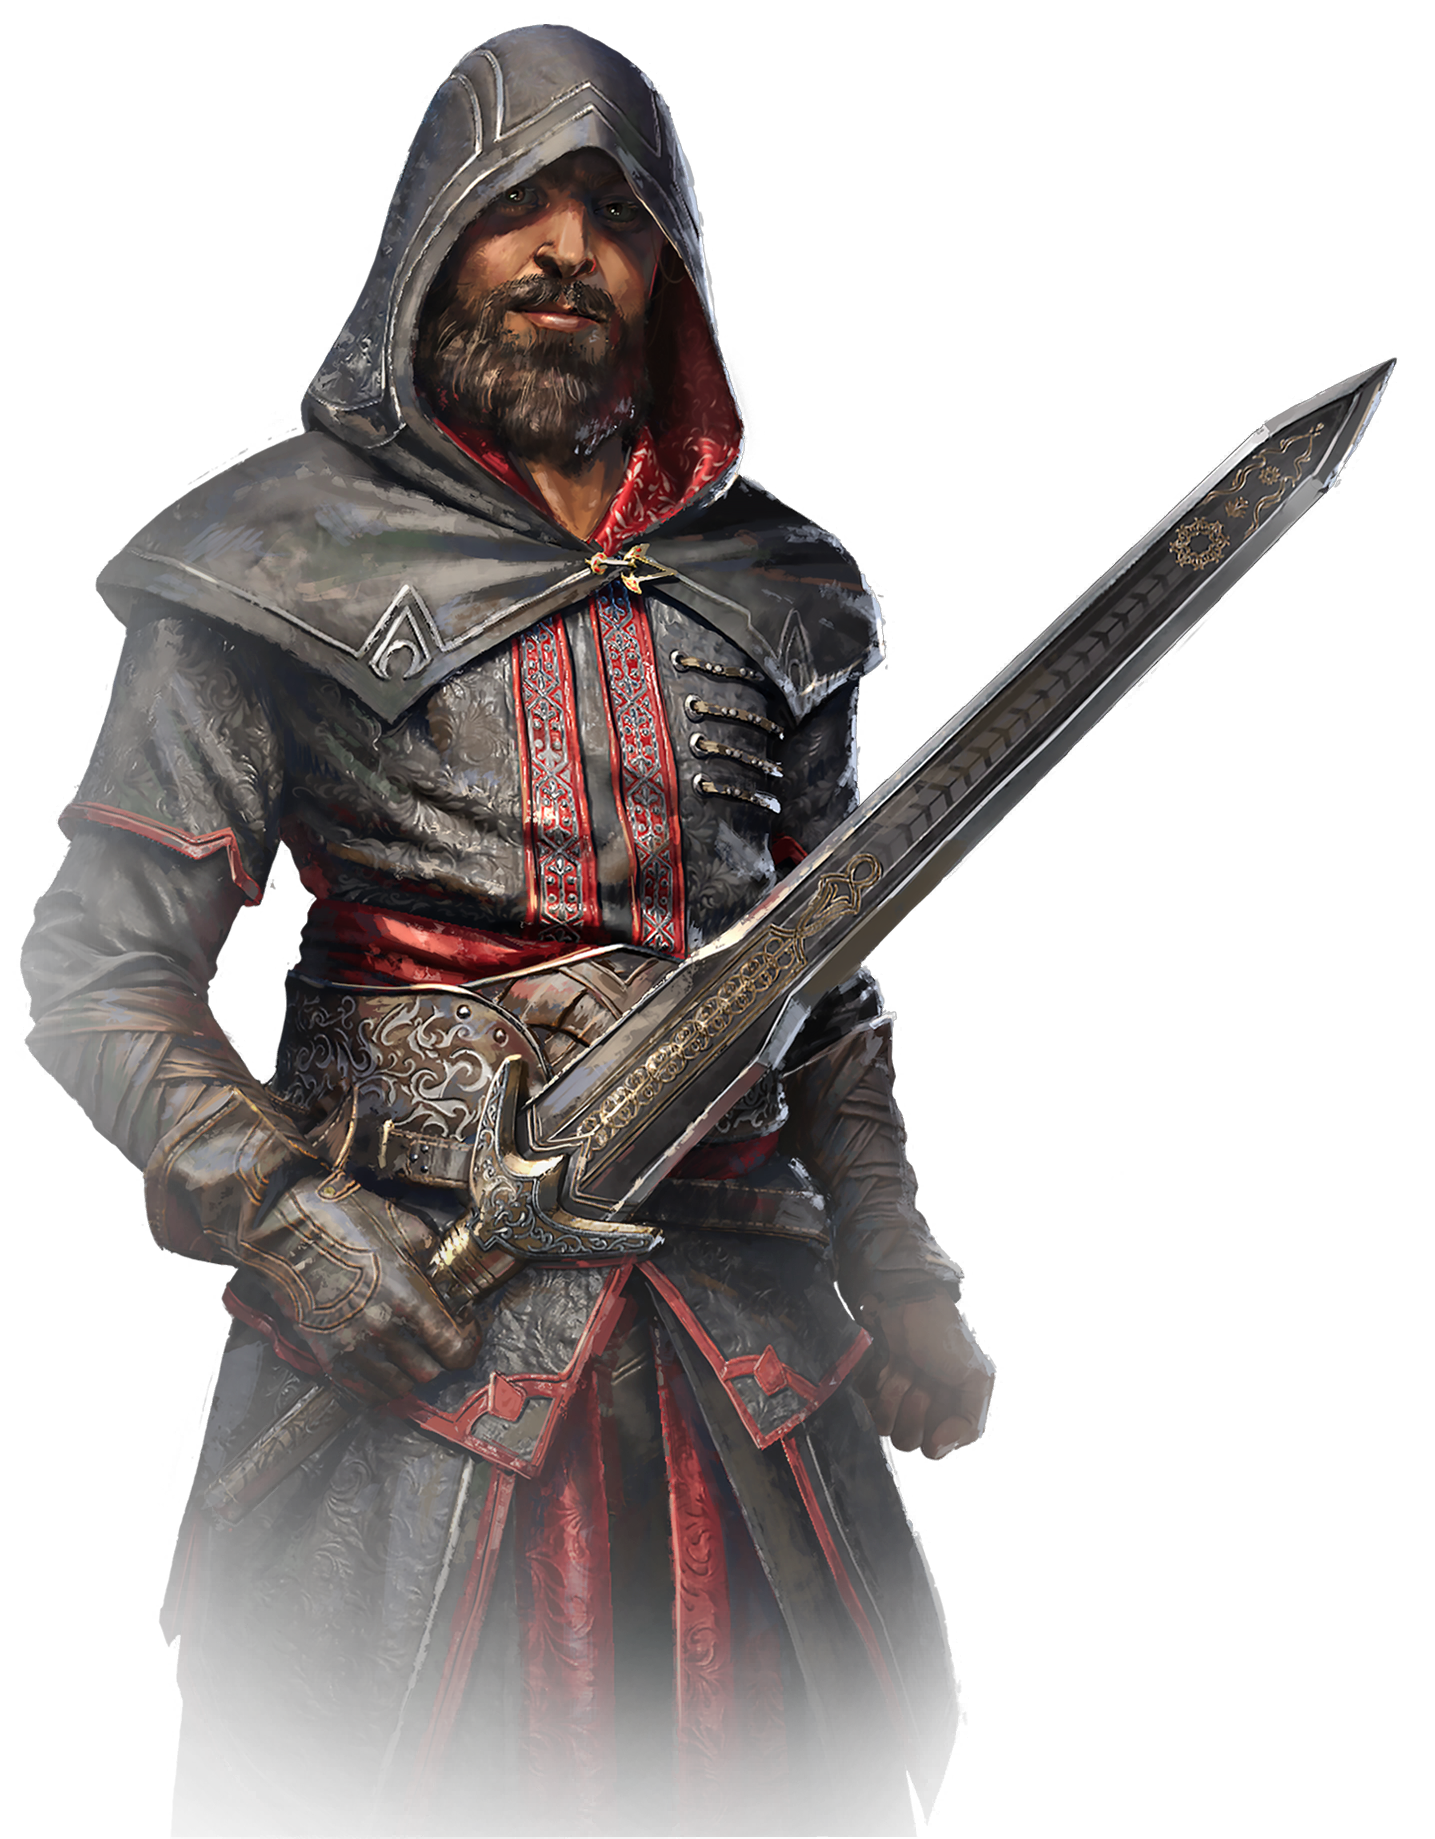 Assassin's Creed III Characters - Giant Bomb